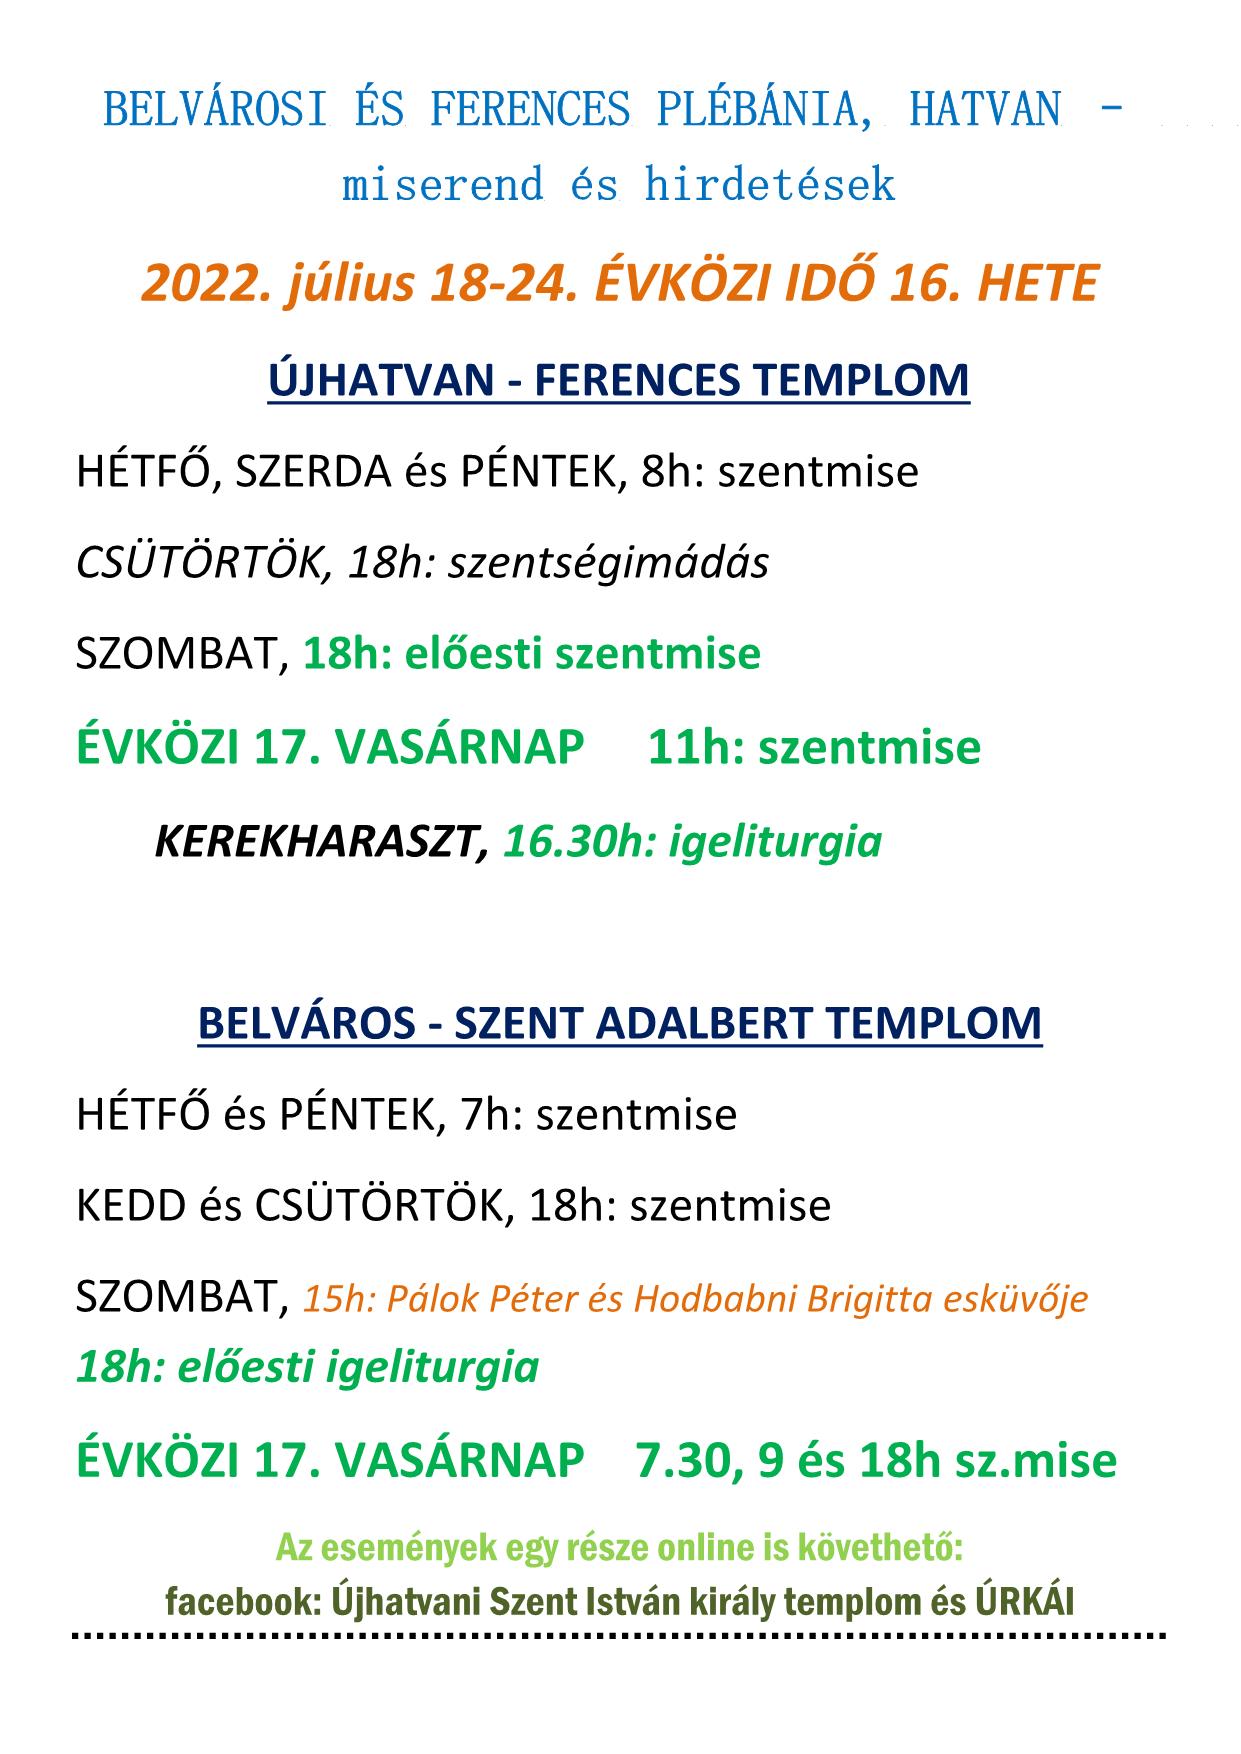 HATVAN FERENCES 2022.07.17 1